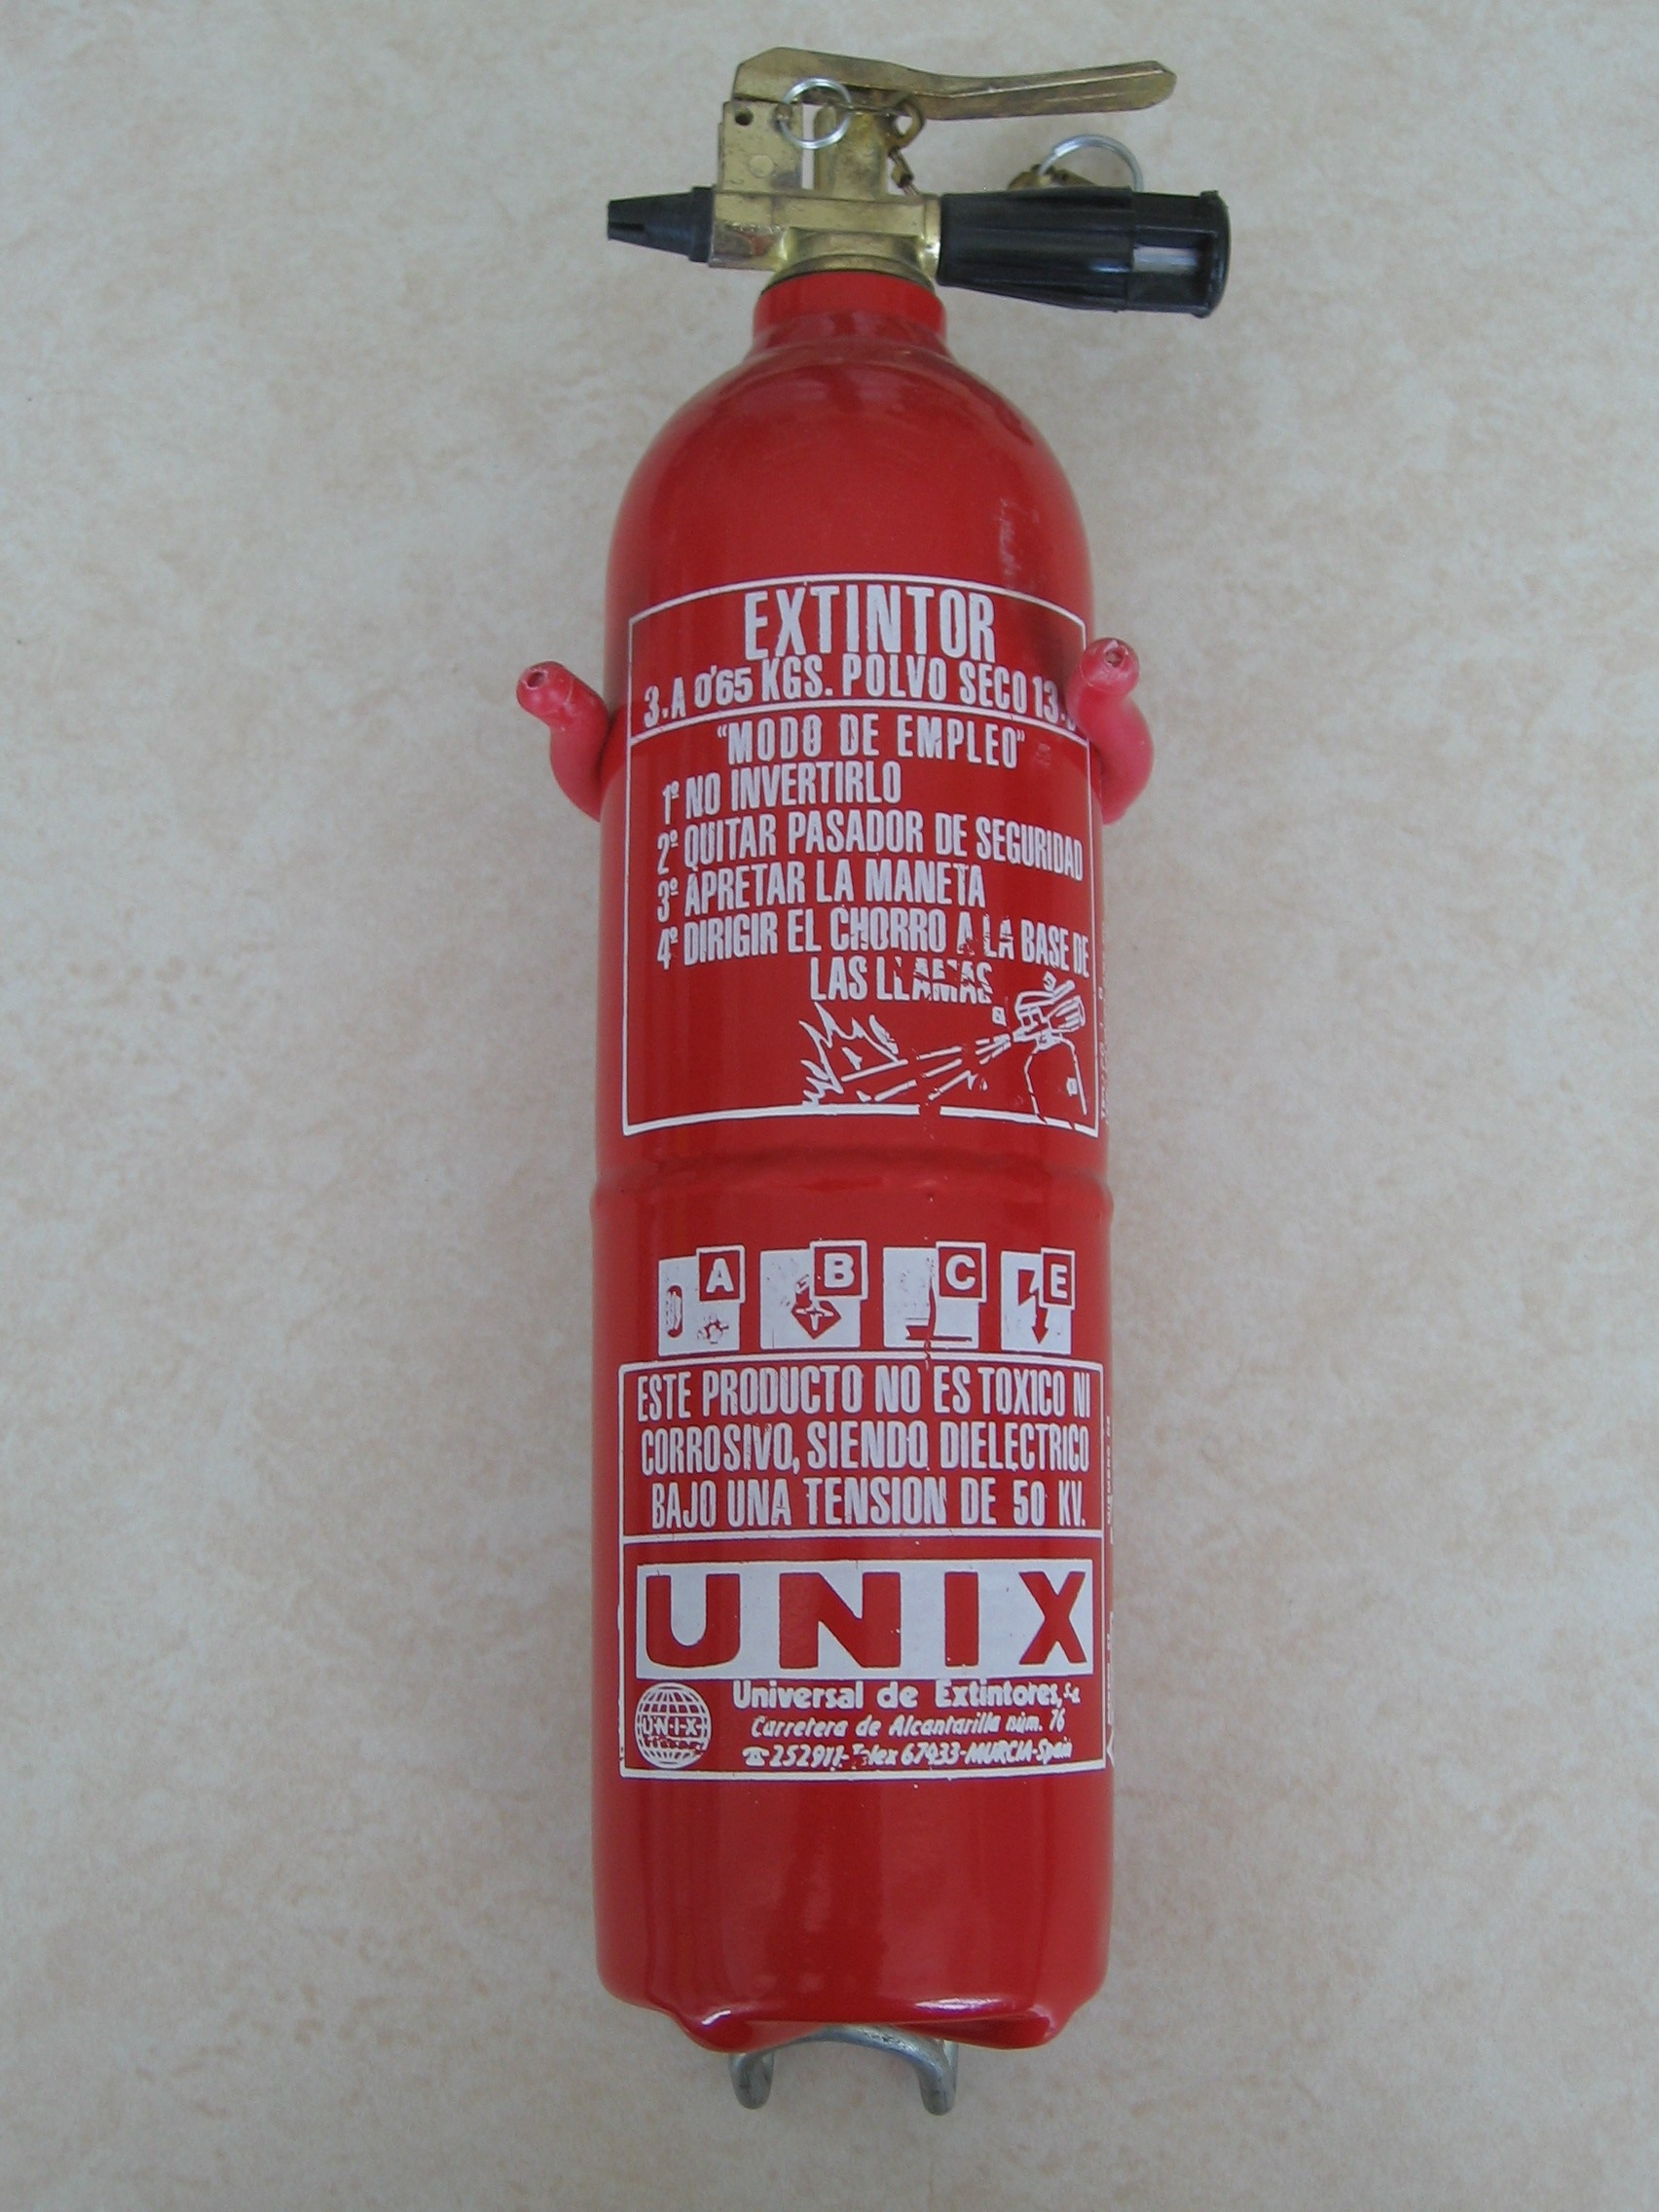 Fire extinguisher - Wikipedia